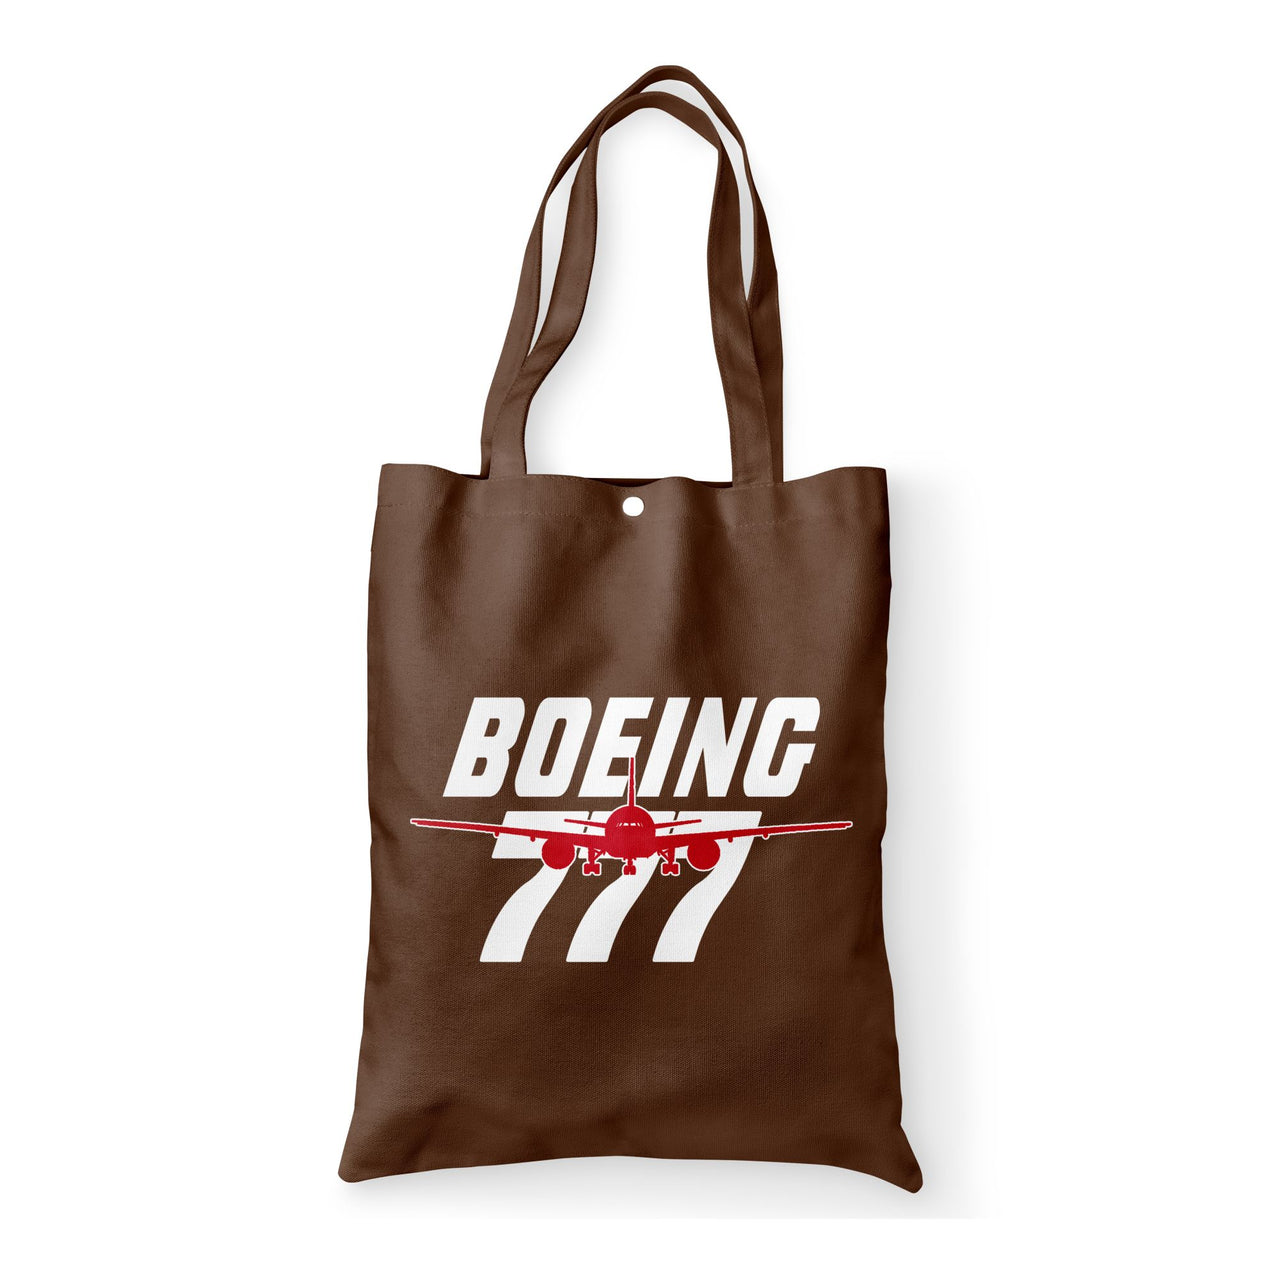 Amazing Boeing 777 Designed Tote Bags